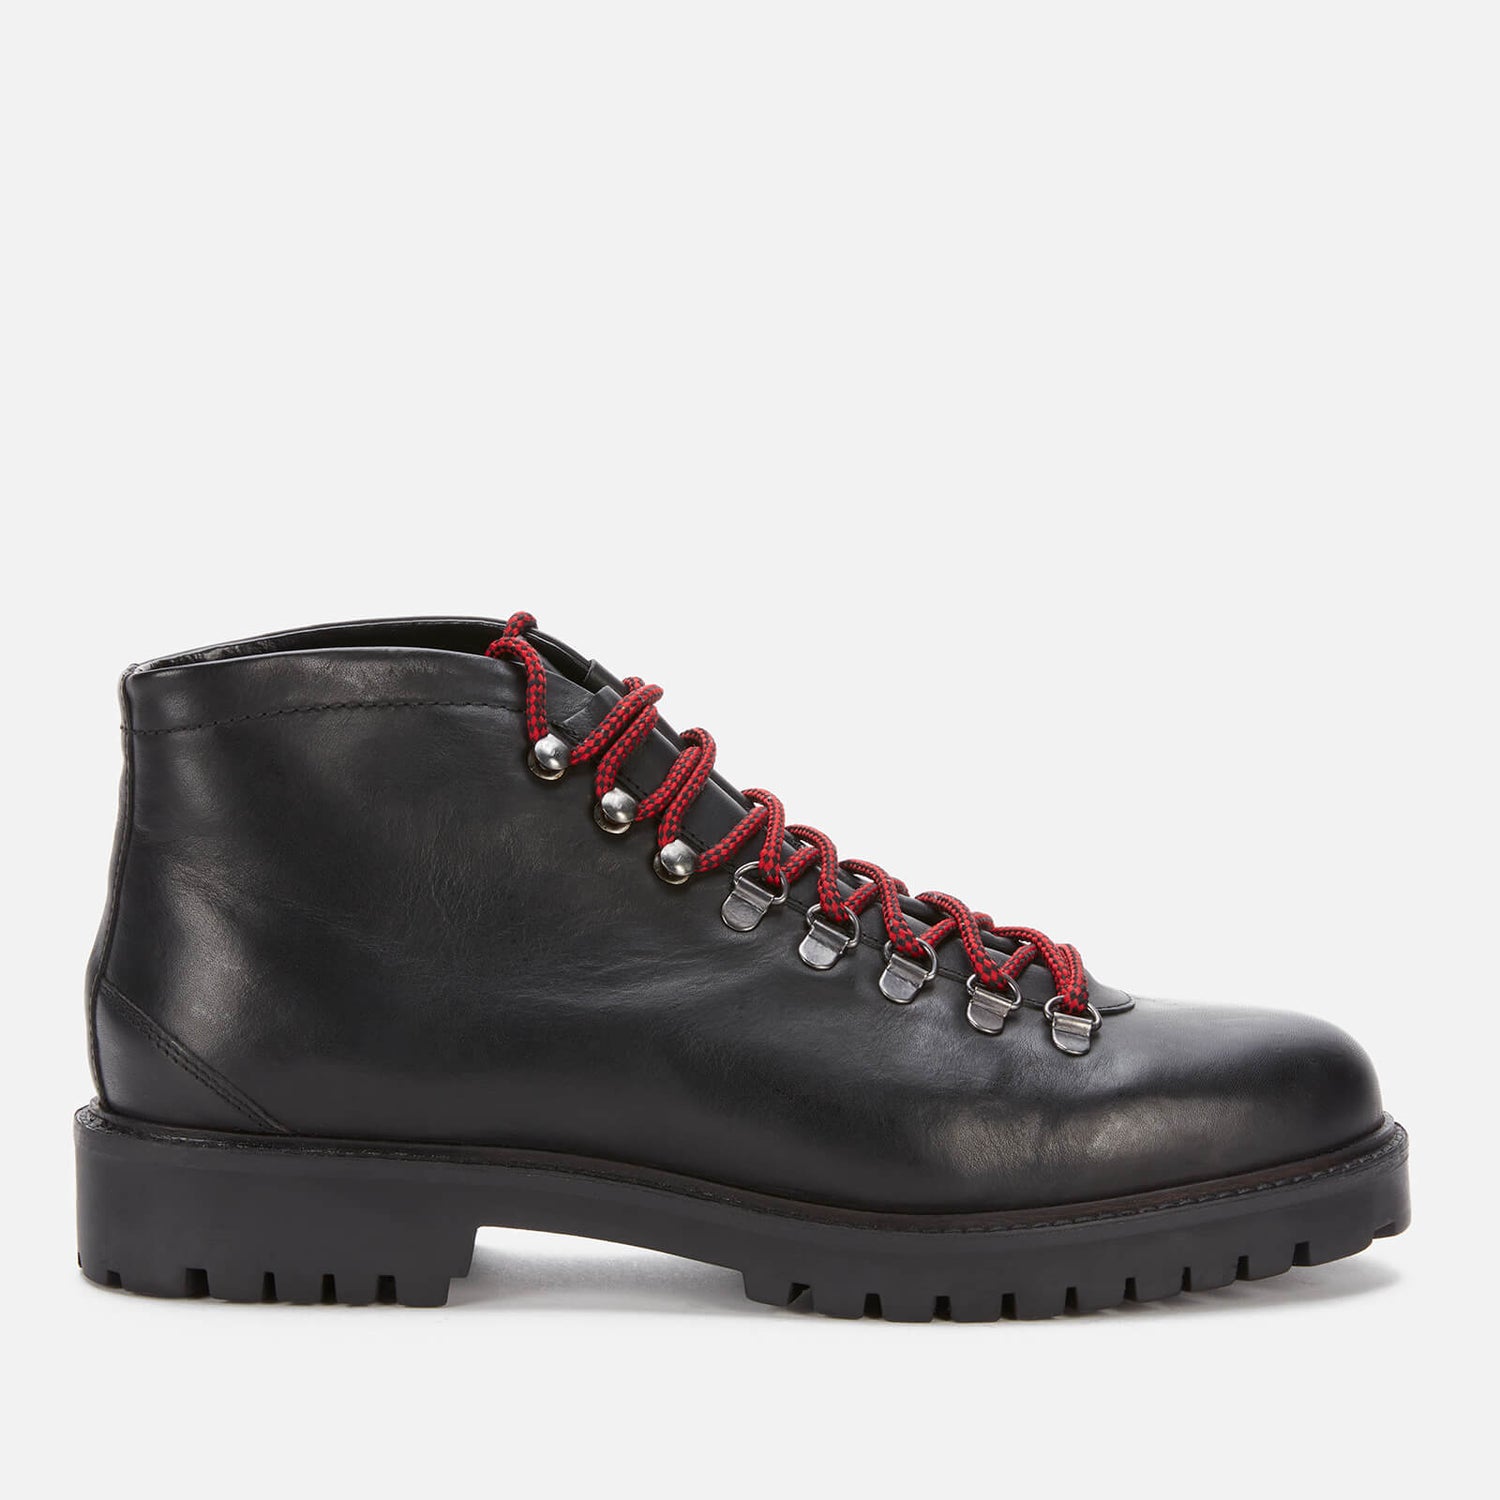 Walk London Men's Sean Leather Hiking Style Boots - Black